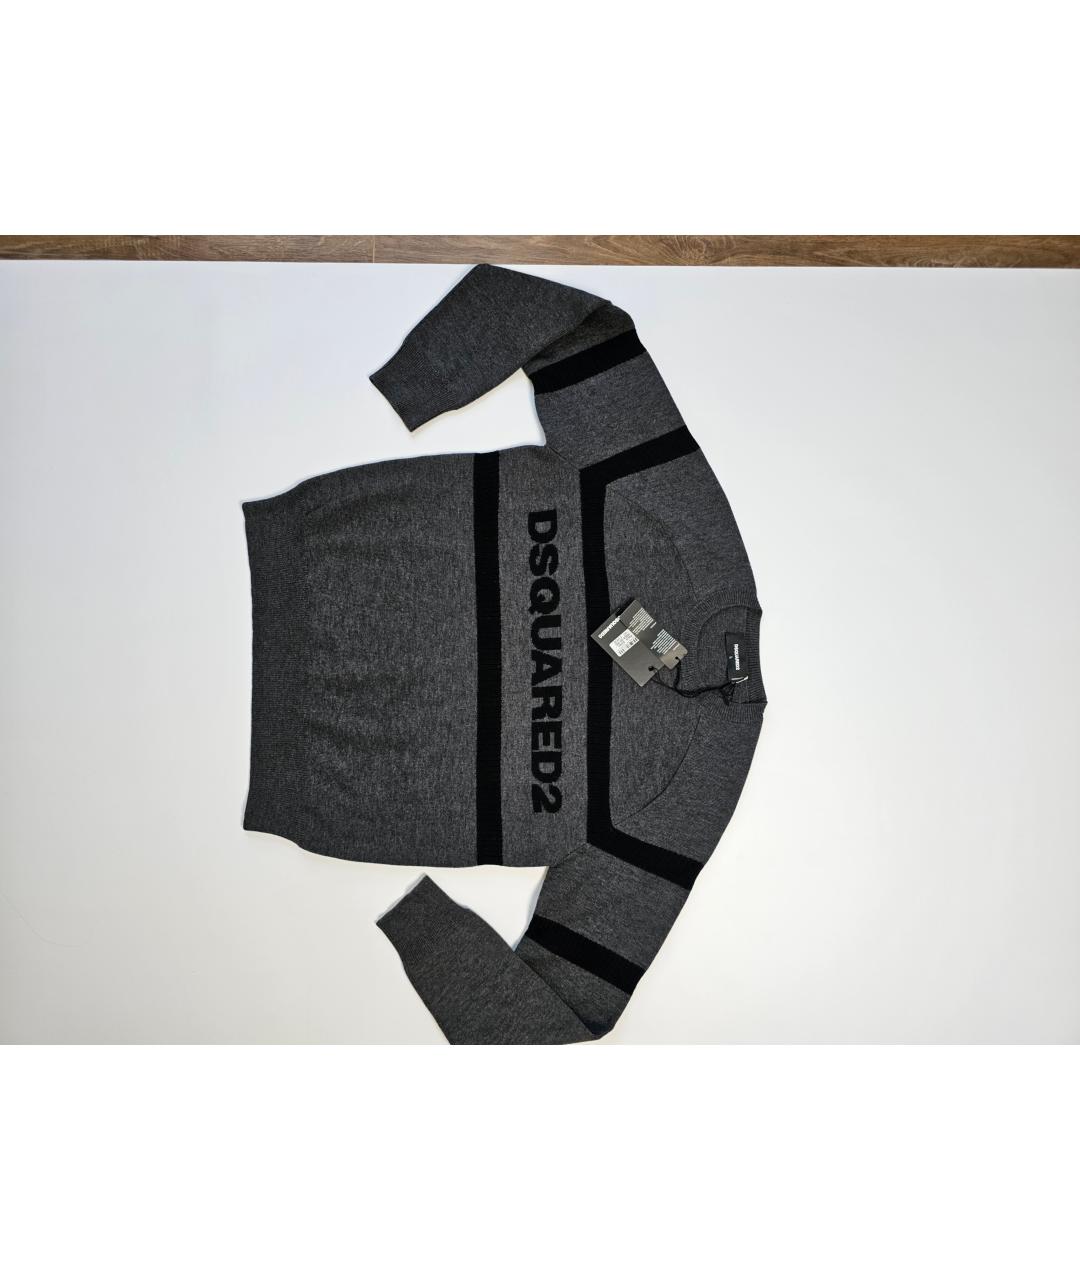 DSQUARED2 Серый шерстяной джемпер / свитер, фото 3